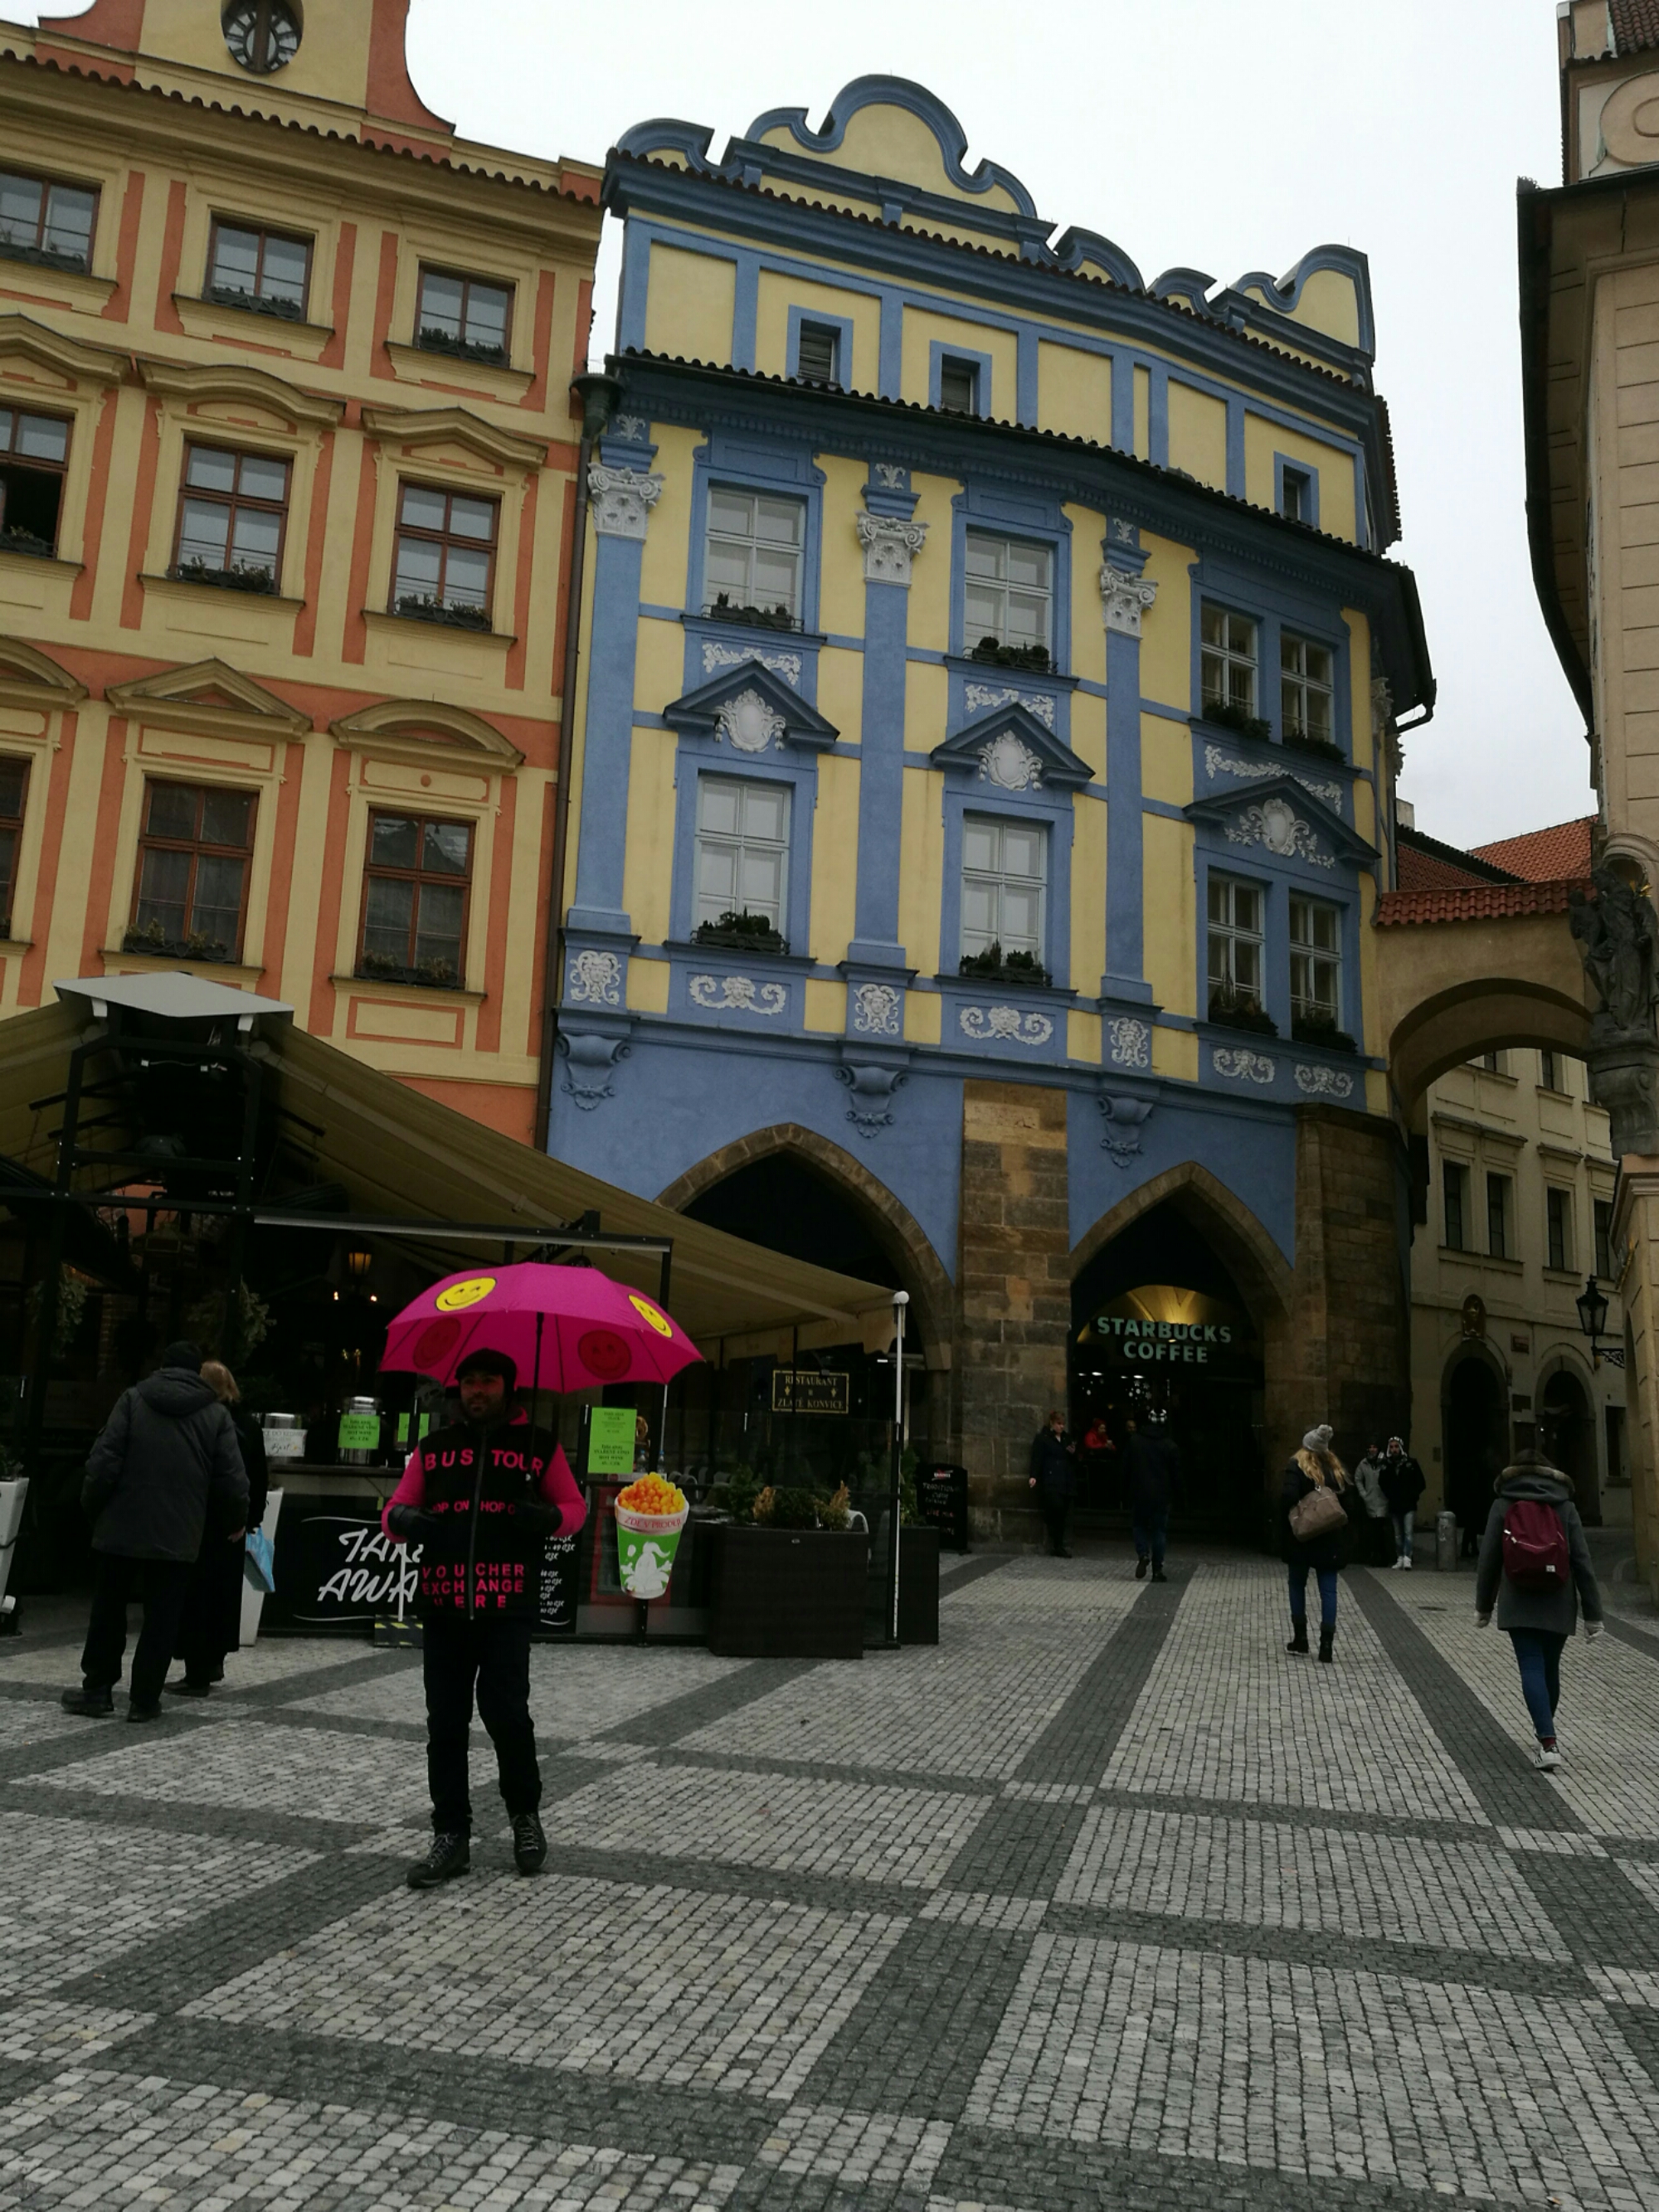 Traditional Czech buildings